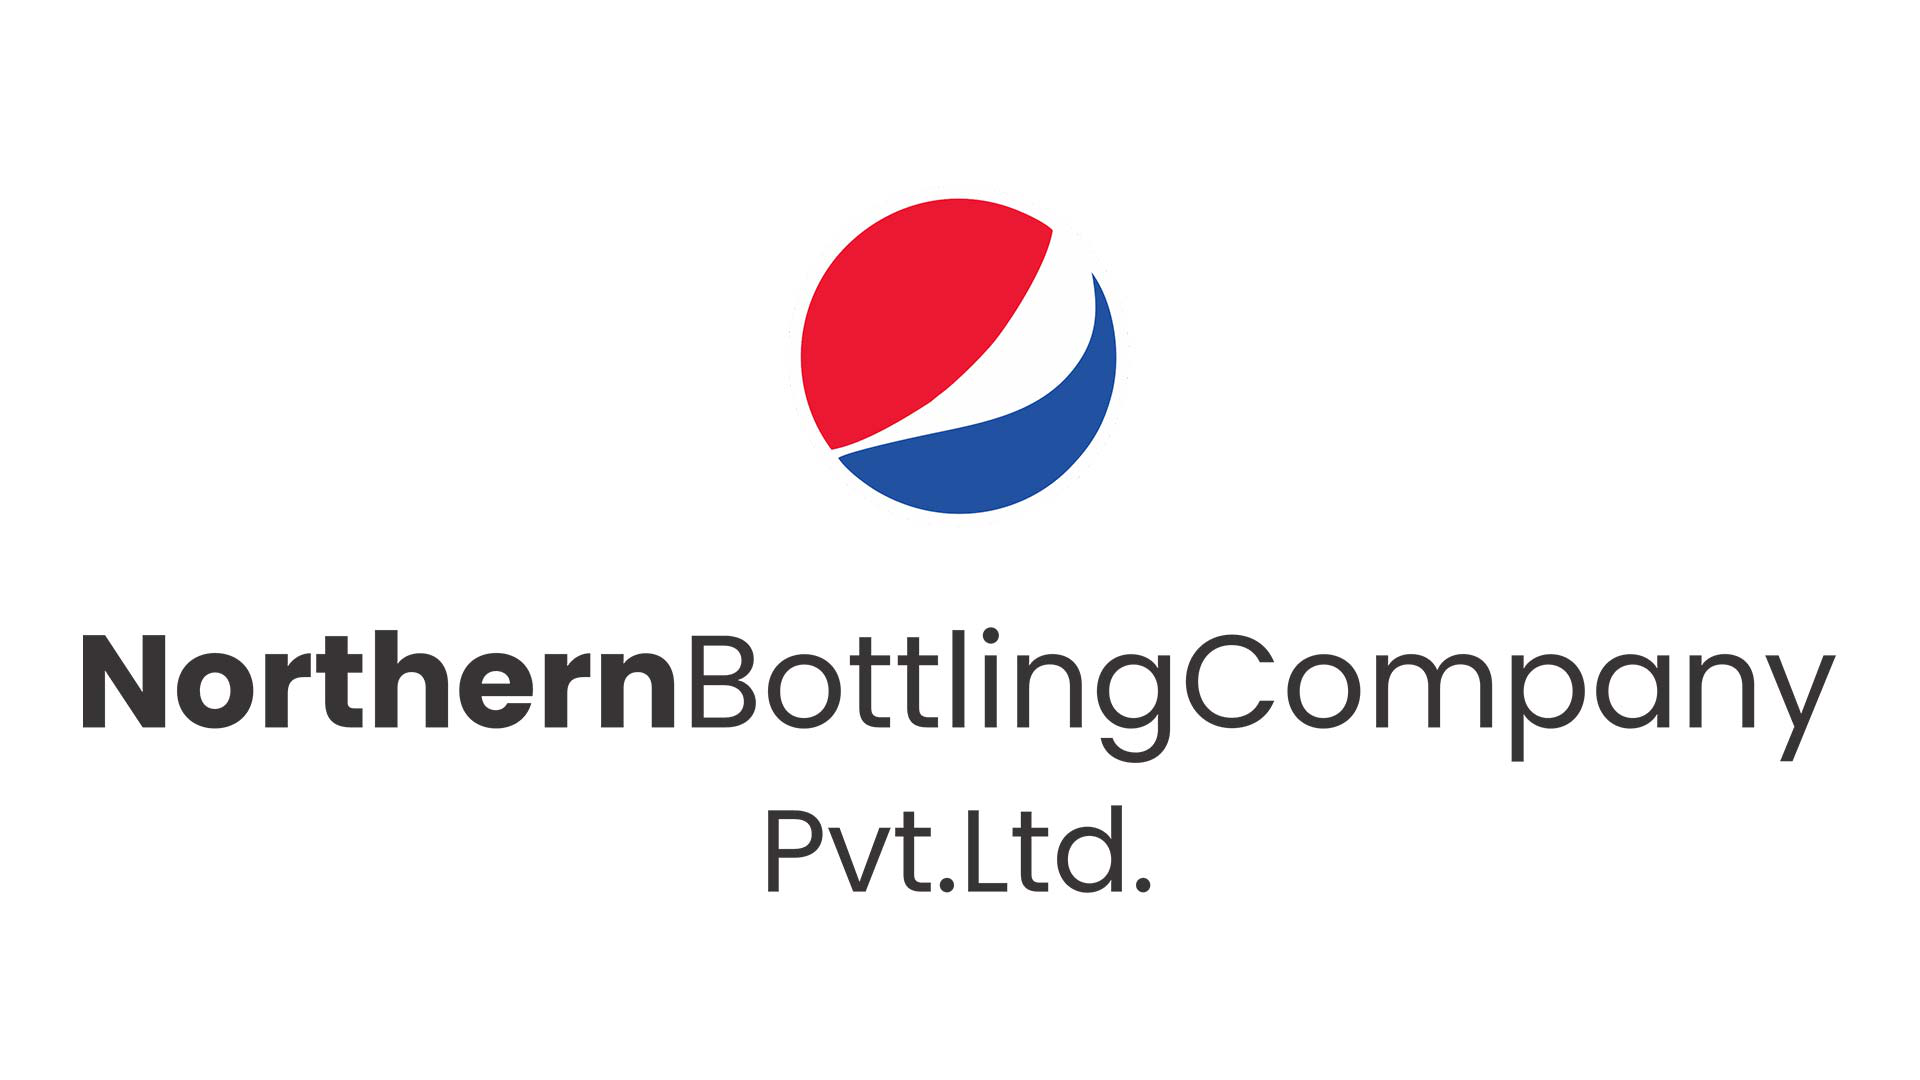 Northern Bottling Company Pvt.Ltd.